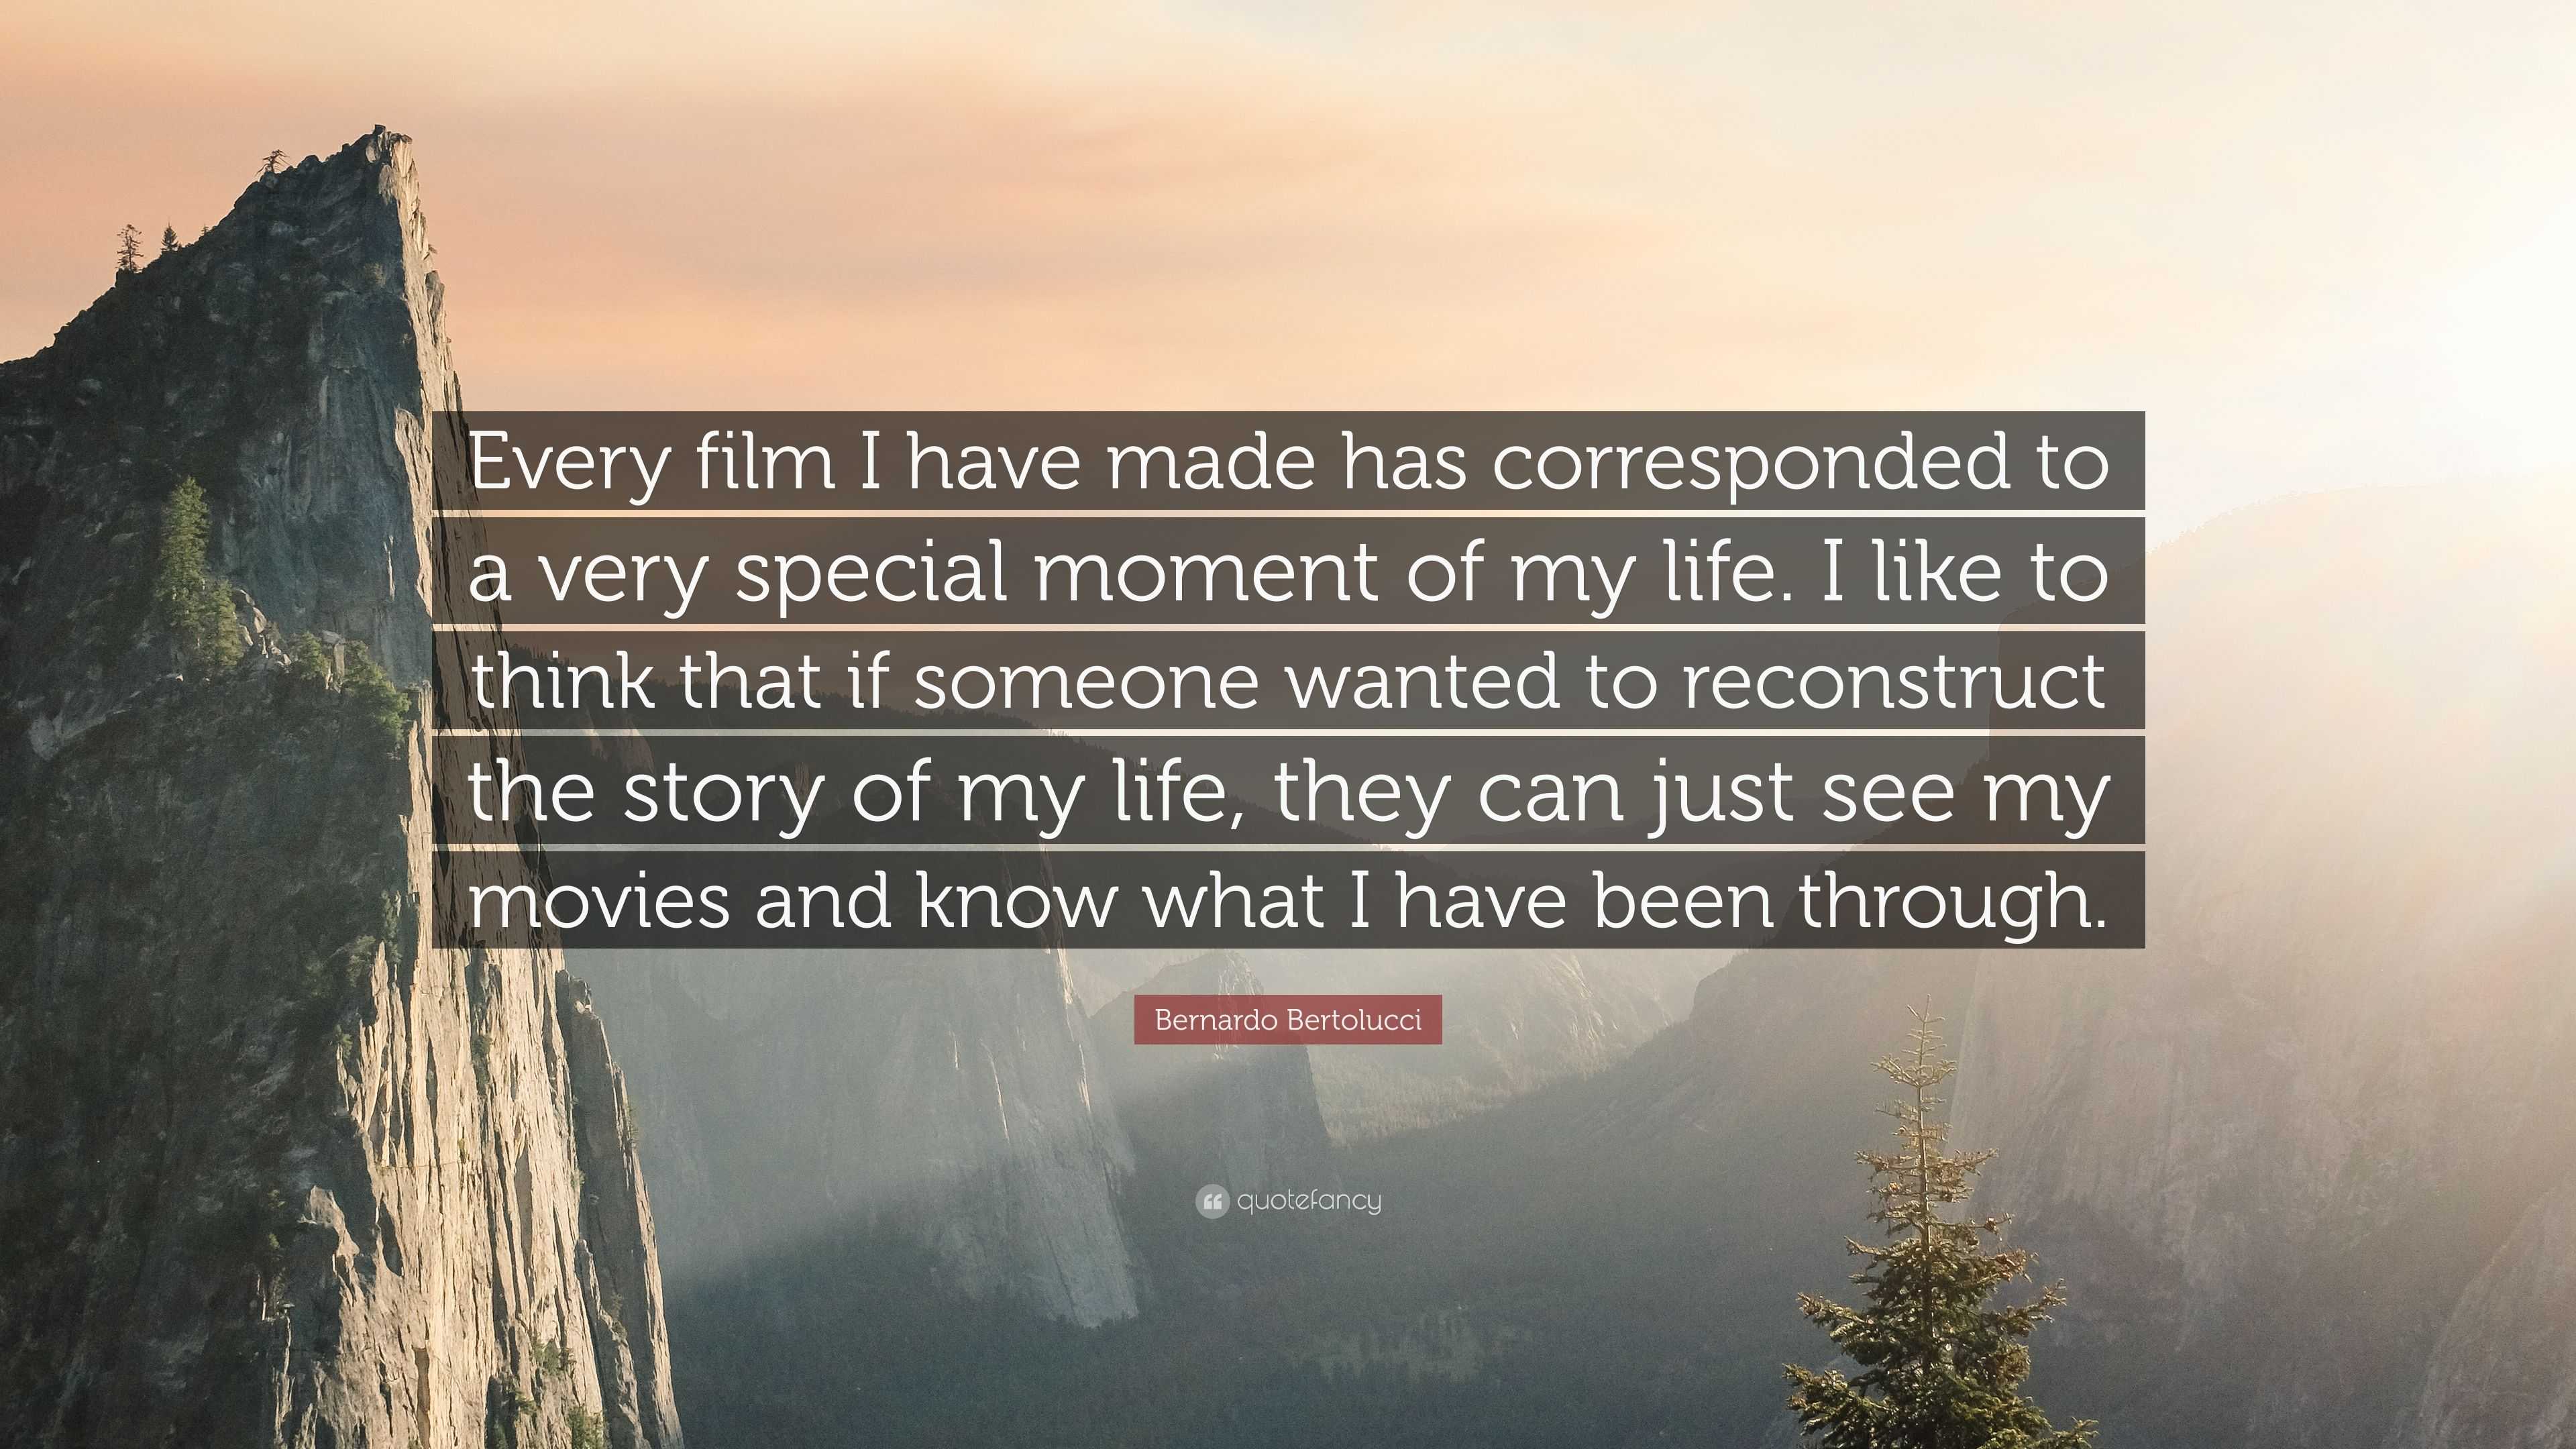 Bernardo Bertolucci Quote “Every film I have made has corresponded to a very special